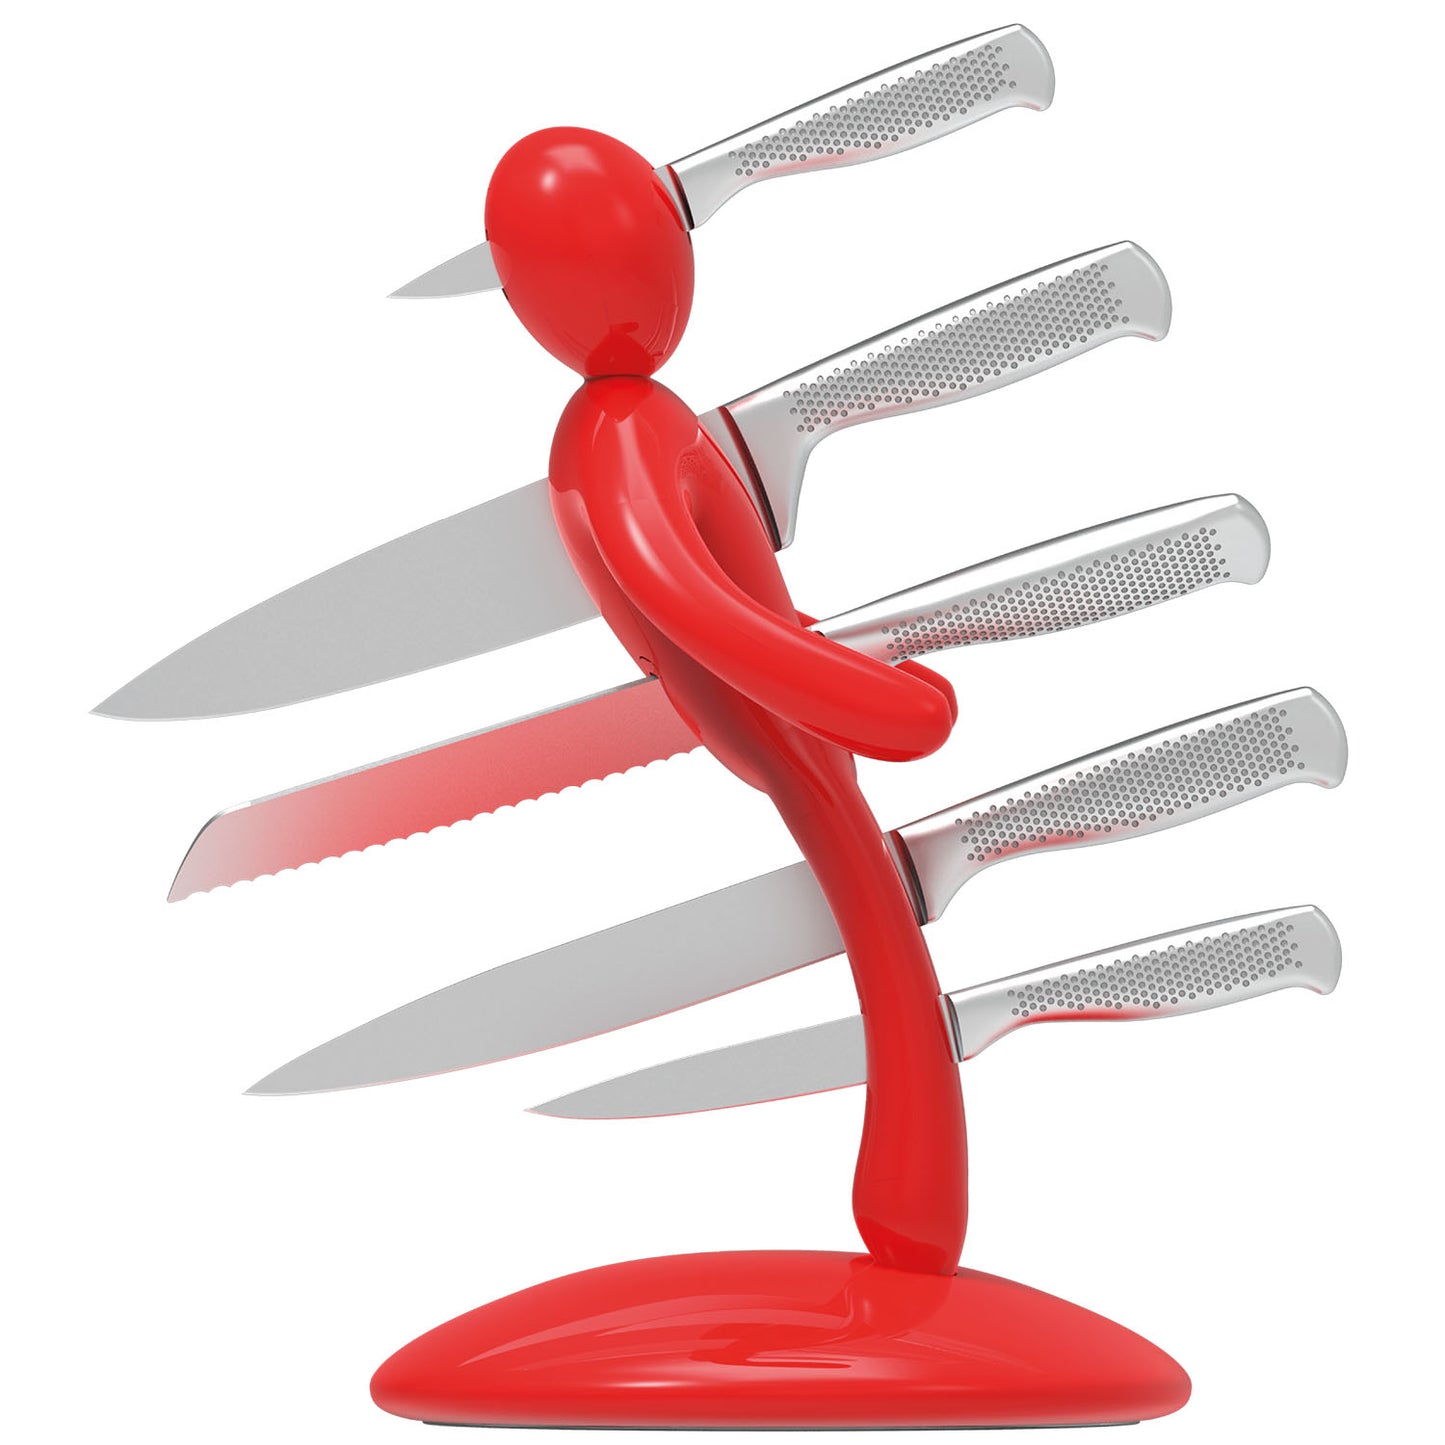 Voodoo/TheEx “Classic Edition” 刀具套装 - 红色塑料刀架（不带刀套）